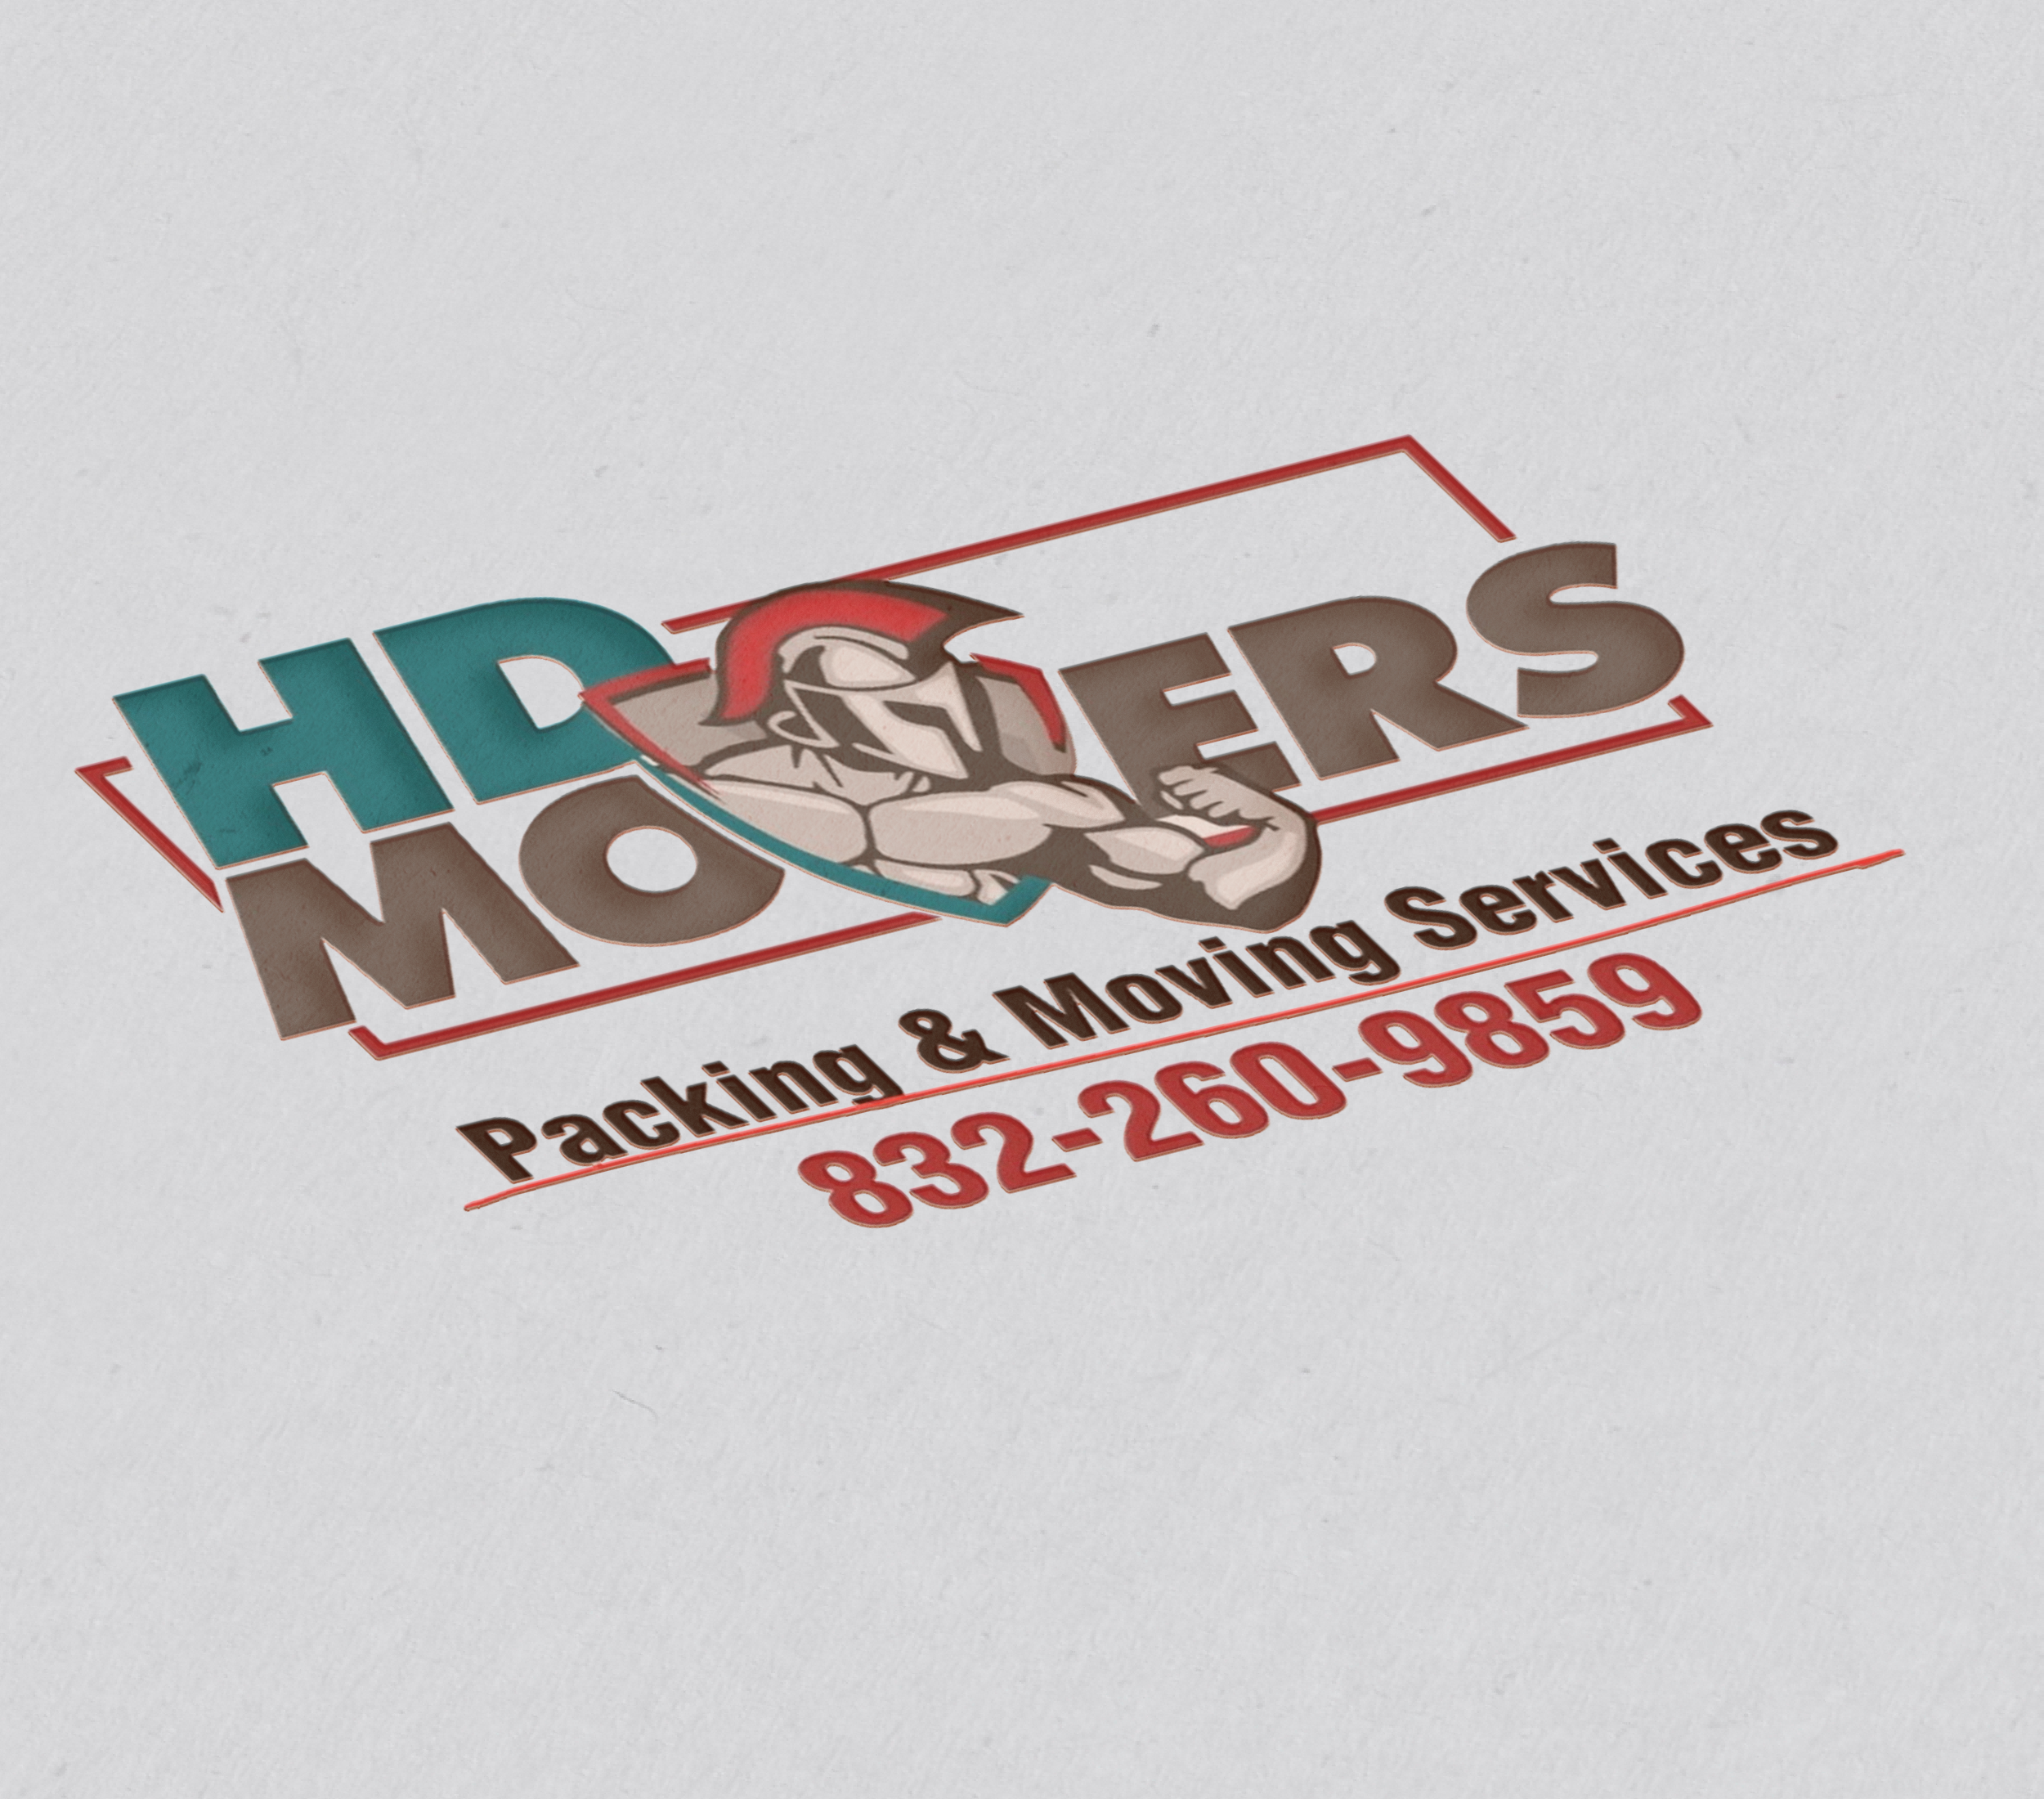 HD Moters